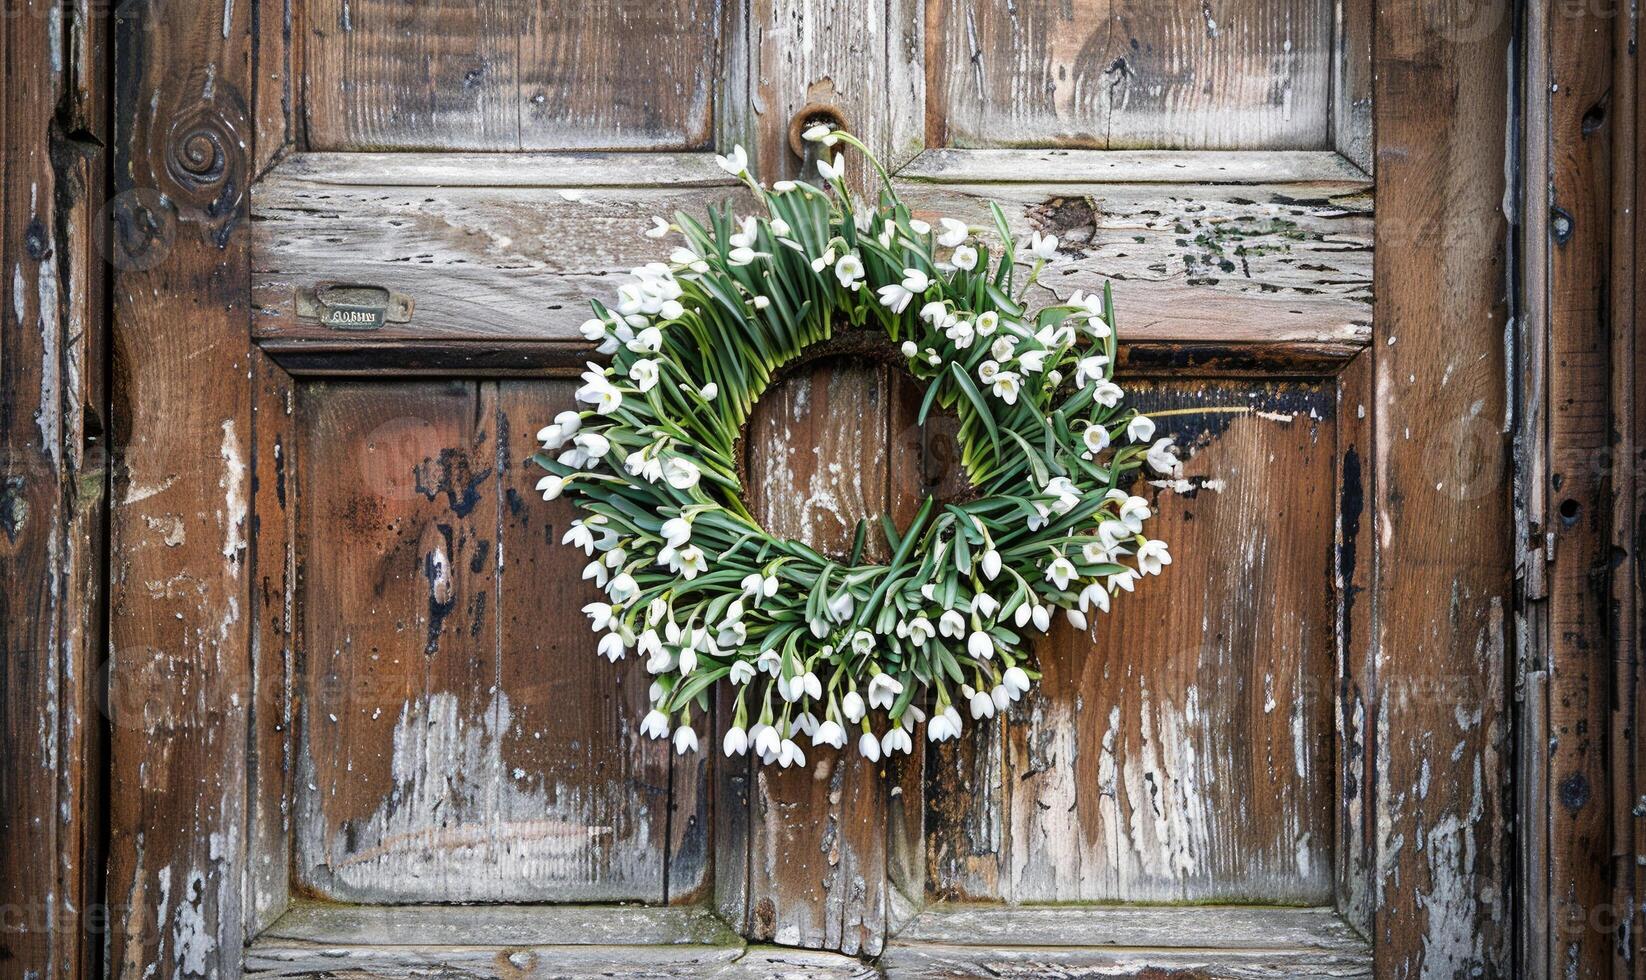 Snowdrops wreath on a wooden door photo